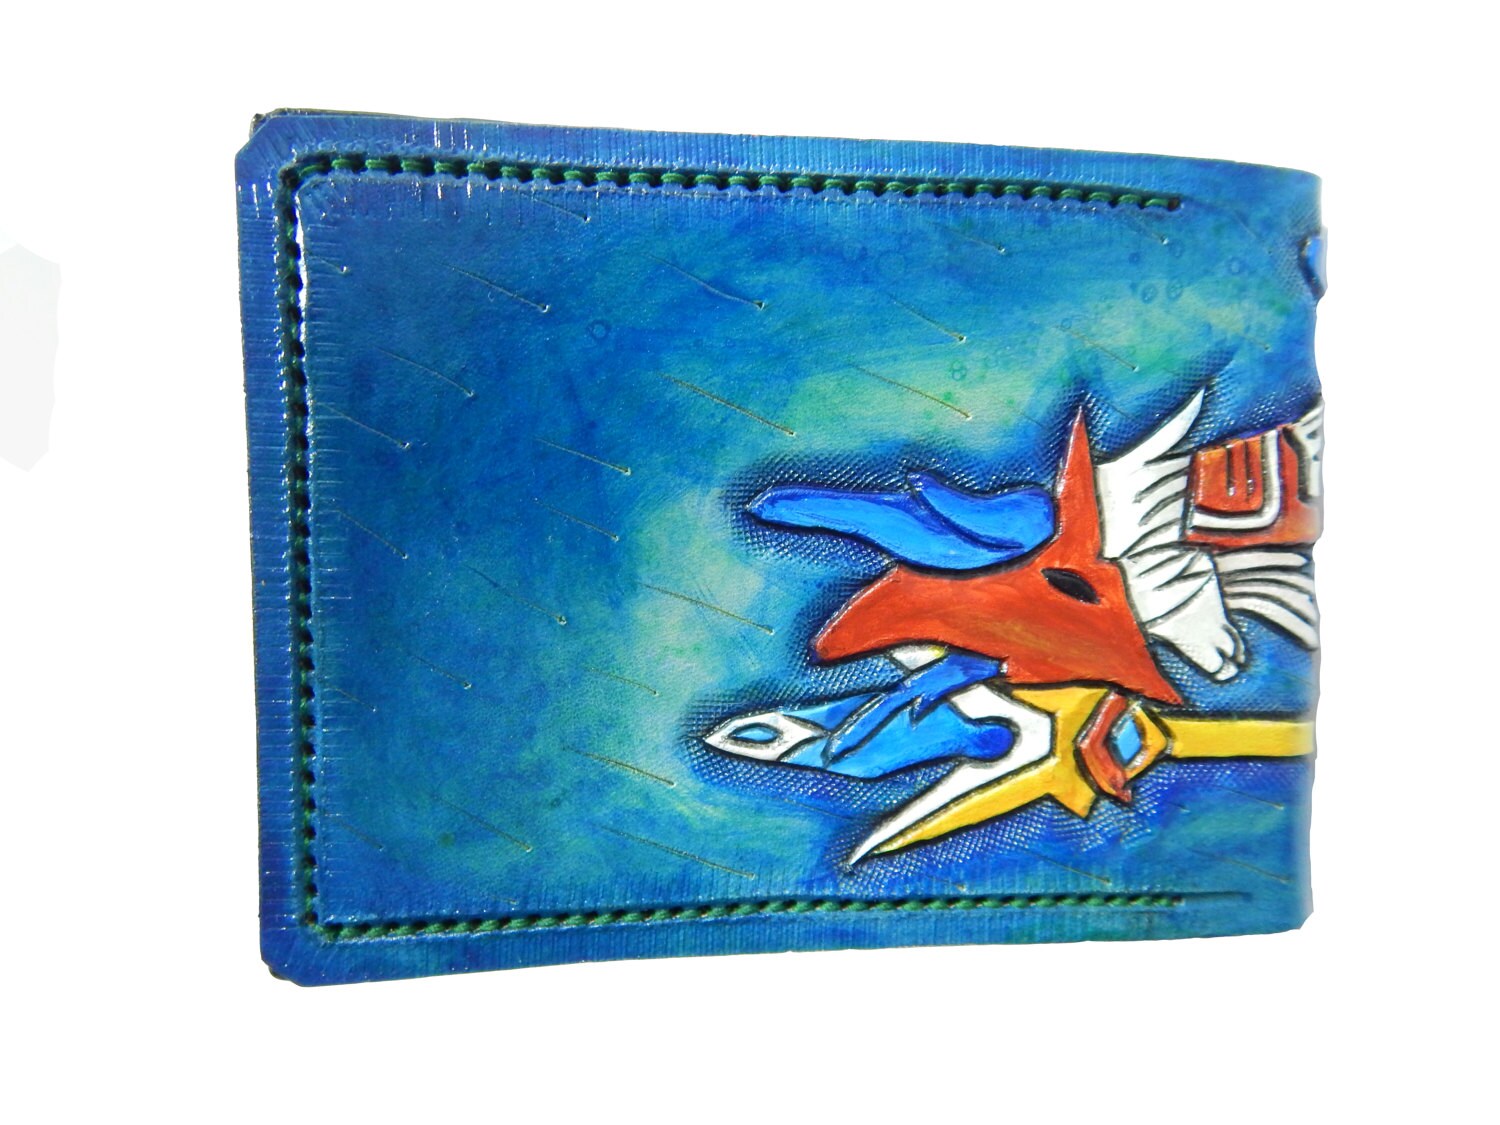 Freya Crescent - Blue version - Leather Bifold Wallet - Handcrafted Final Fantasy inspired Wallet -